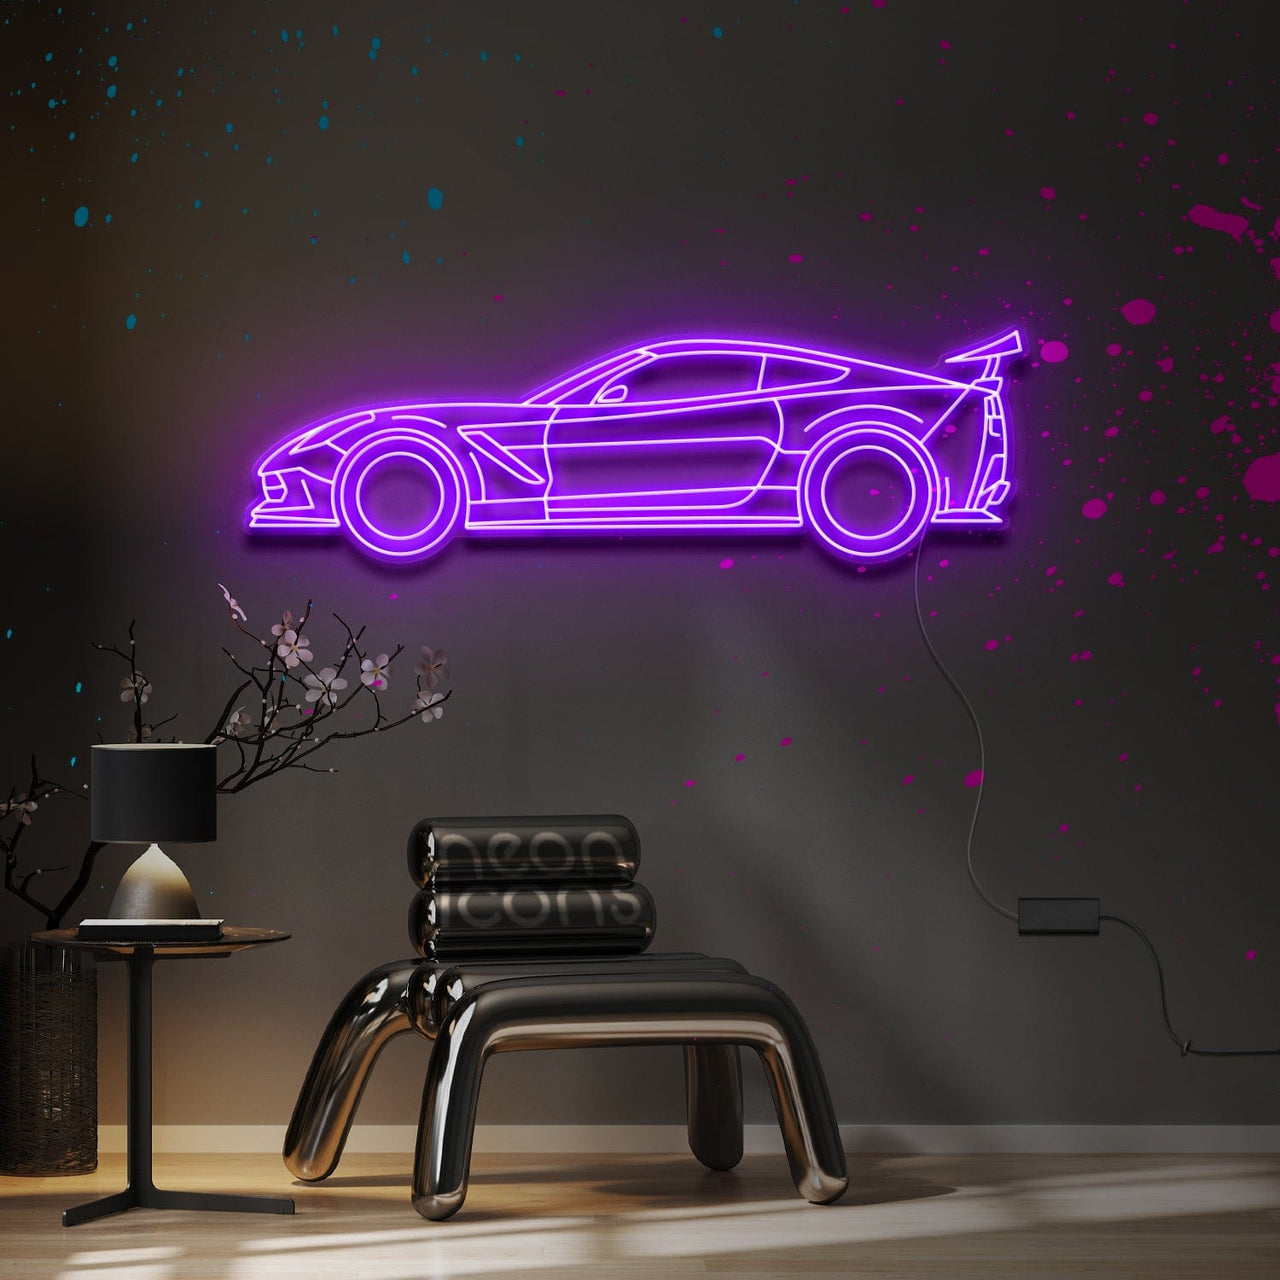 "Corvette C7 ZR1" Neon Sign 4ft x 1.3ft / Purple / LED Neon by Neon Icons